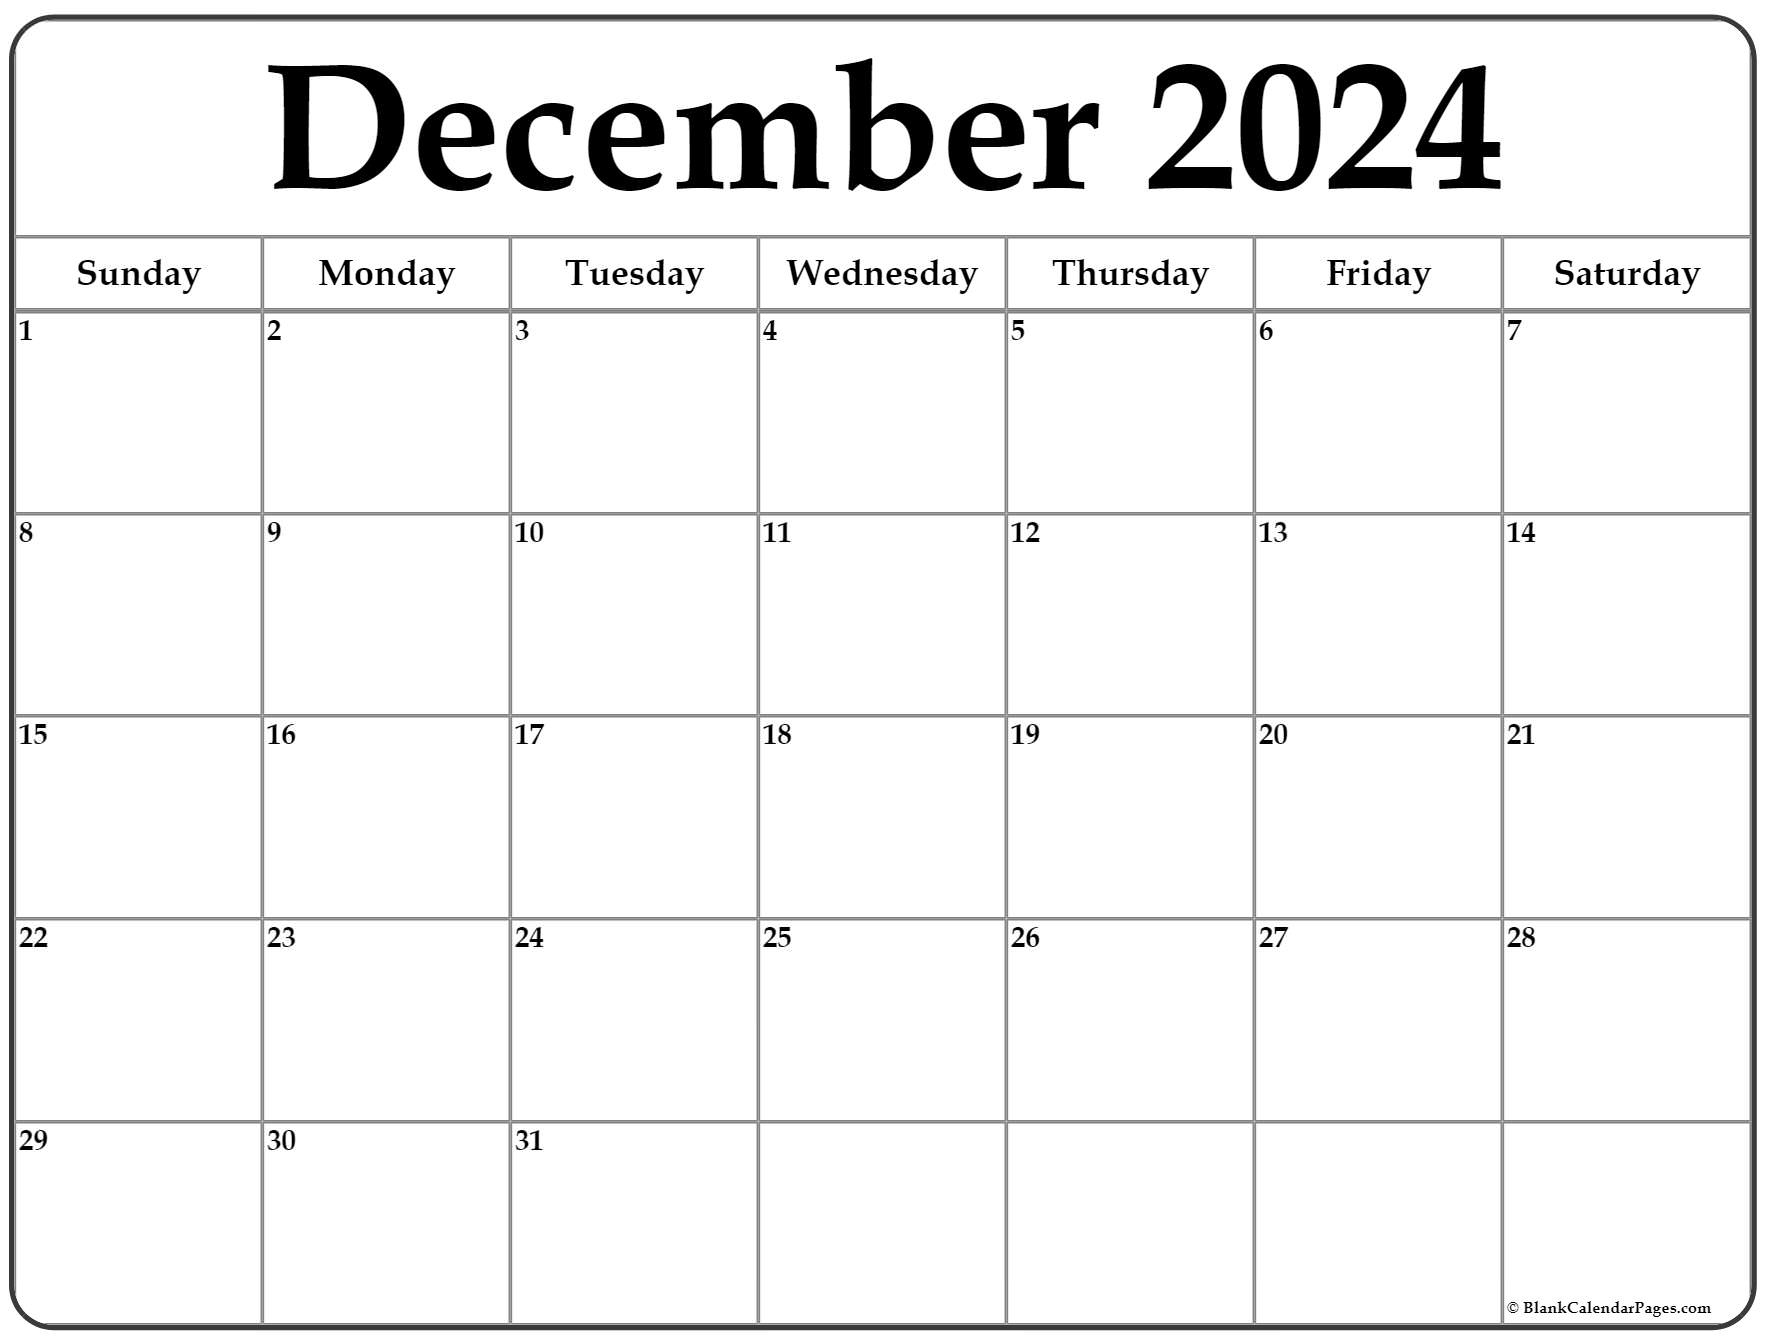 December 2024 Calendar | Free Printable Calendar pertaining to Free Printable Calendar 2024 Dec